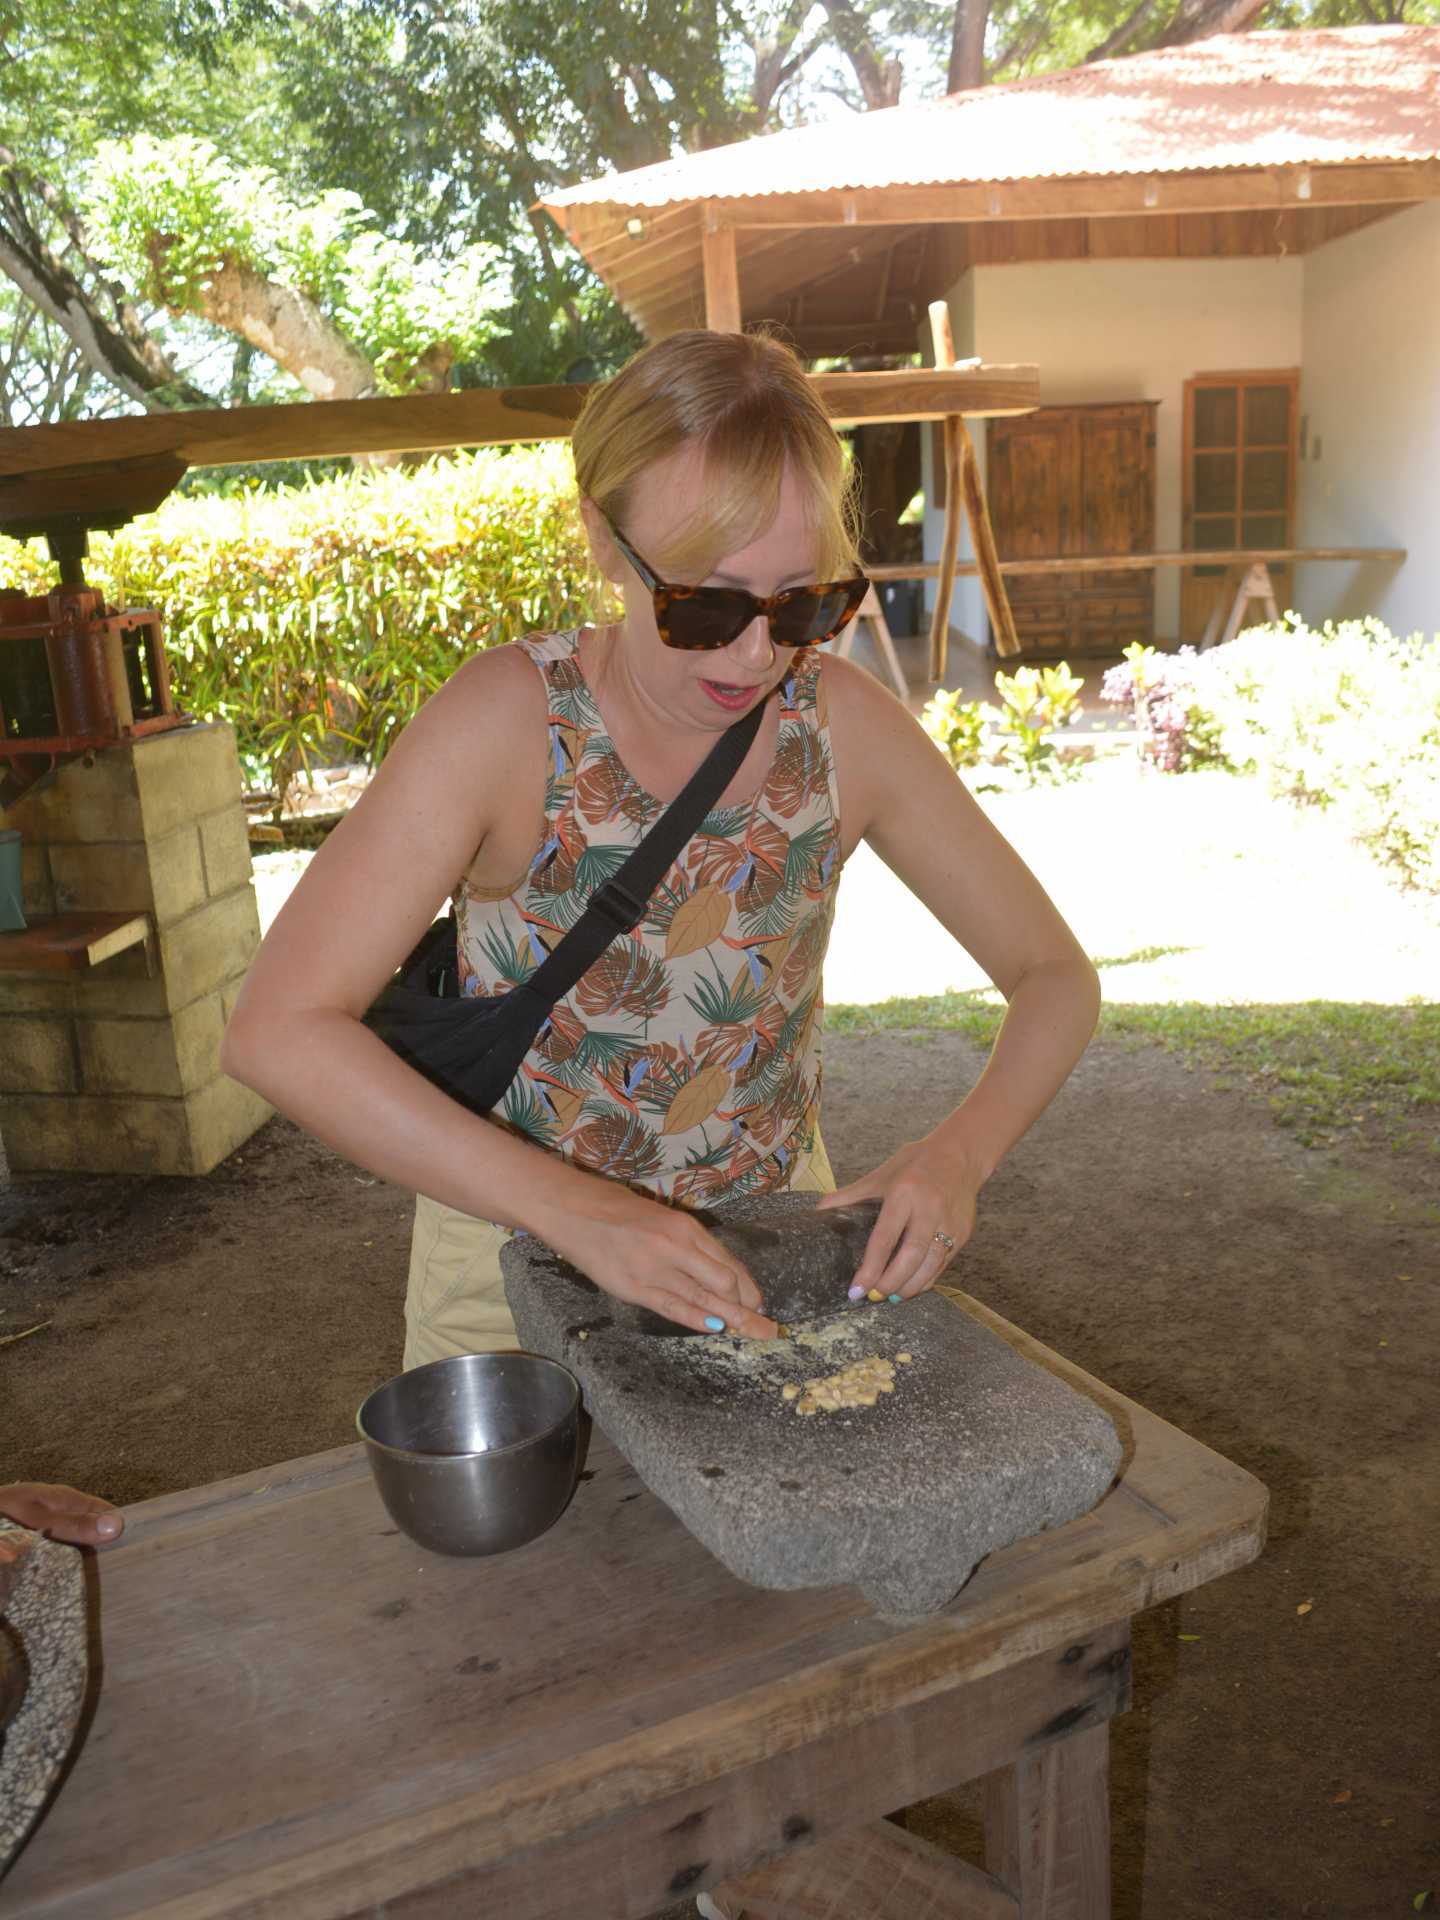 Hacienda Aromal cultural experience in the Papagayo Peninsula, Costa Rica | Editor Katie Bridges grinds corn tortillas by hand